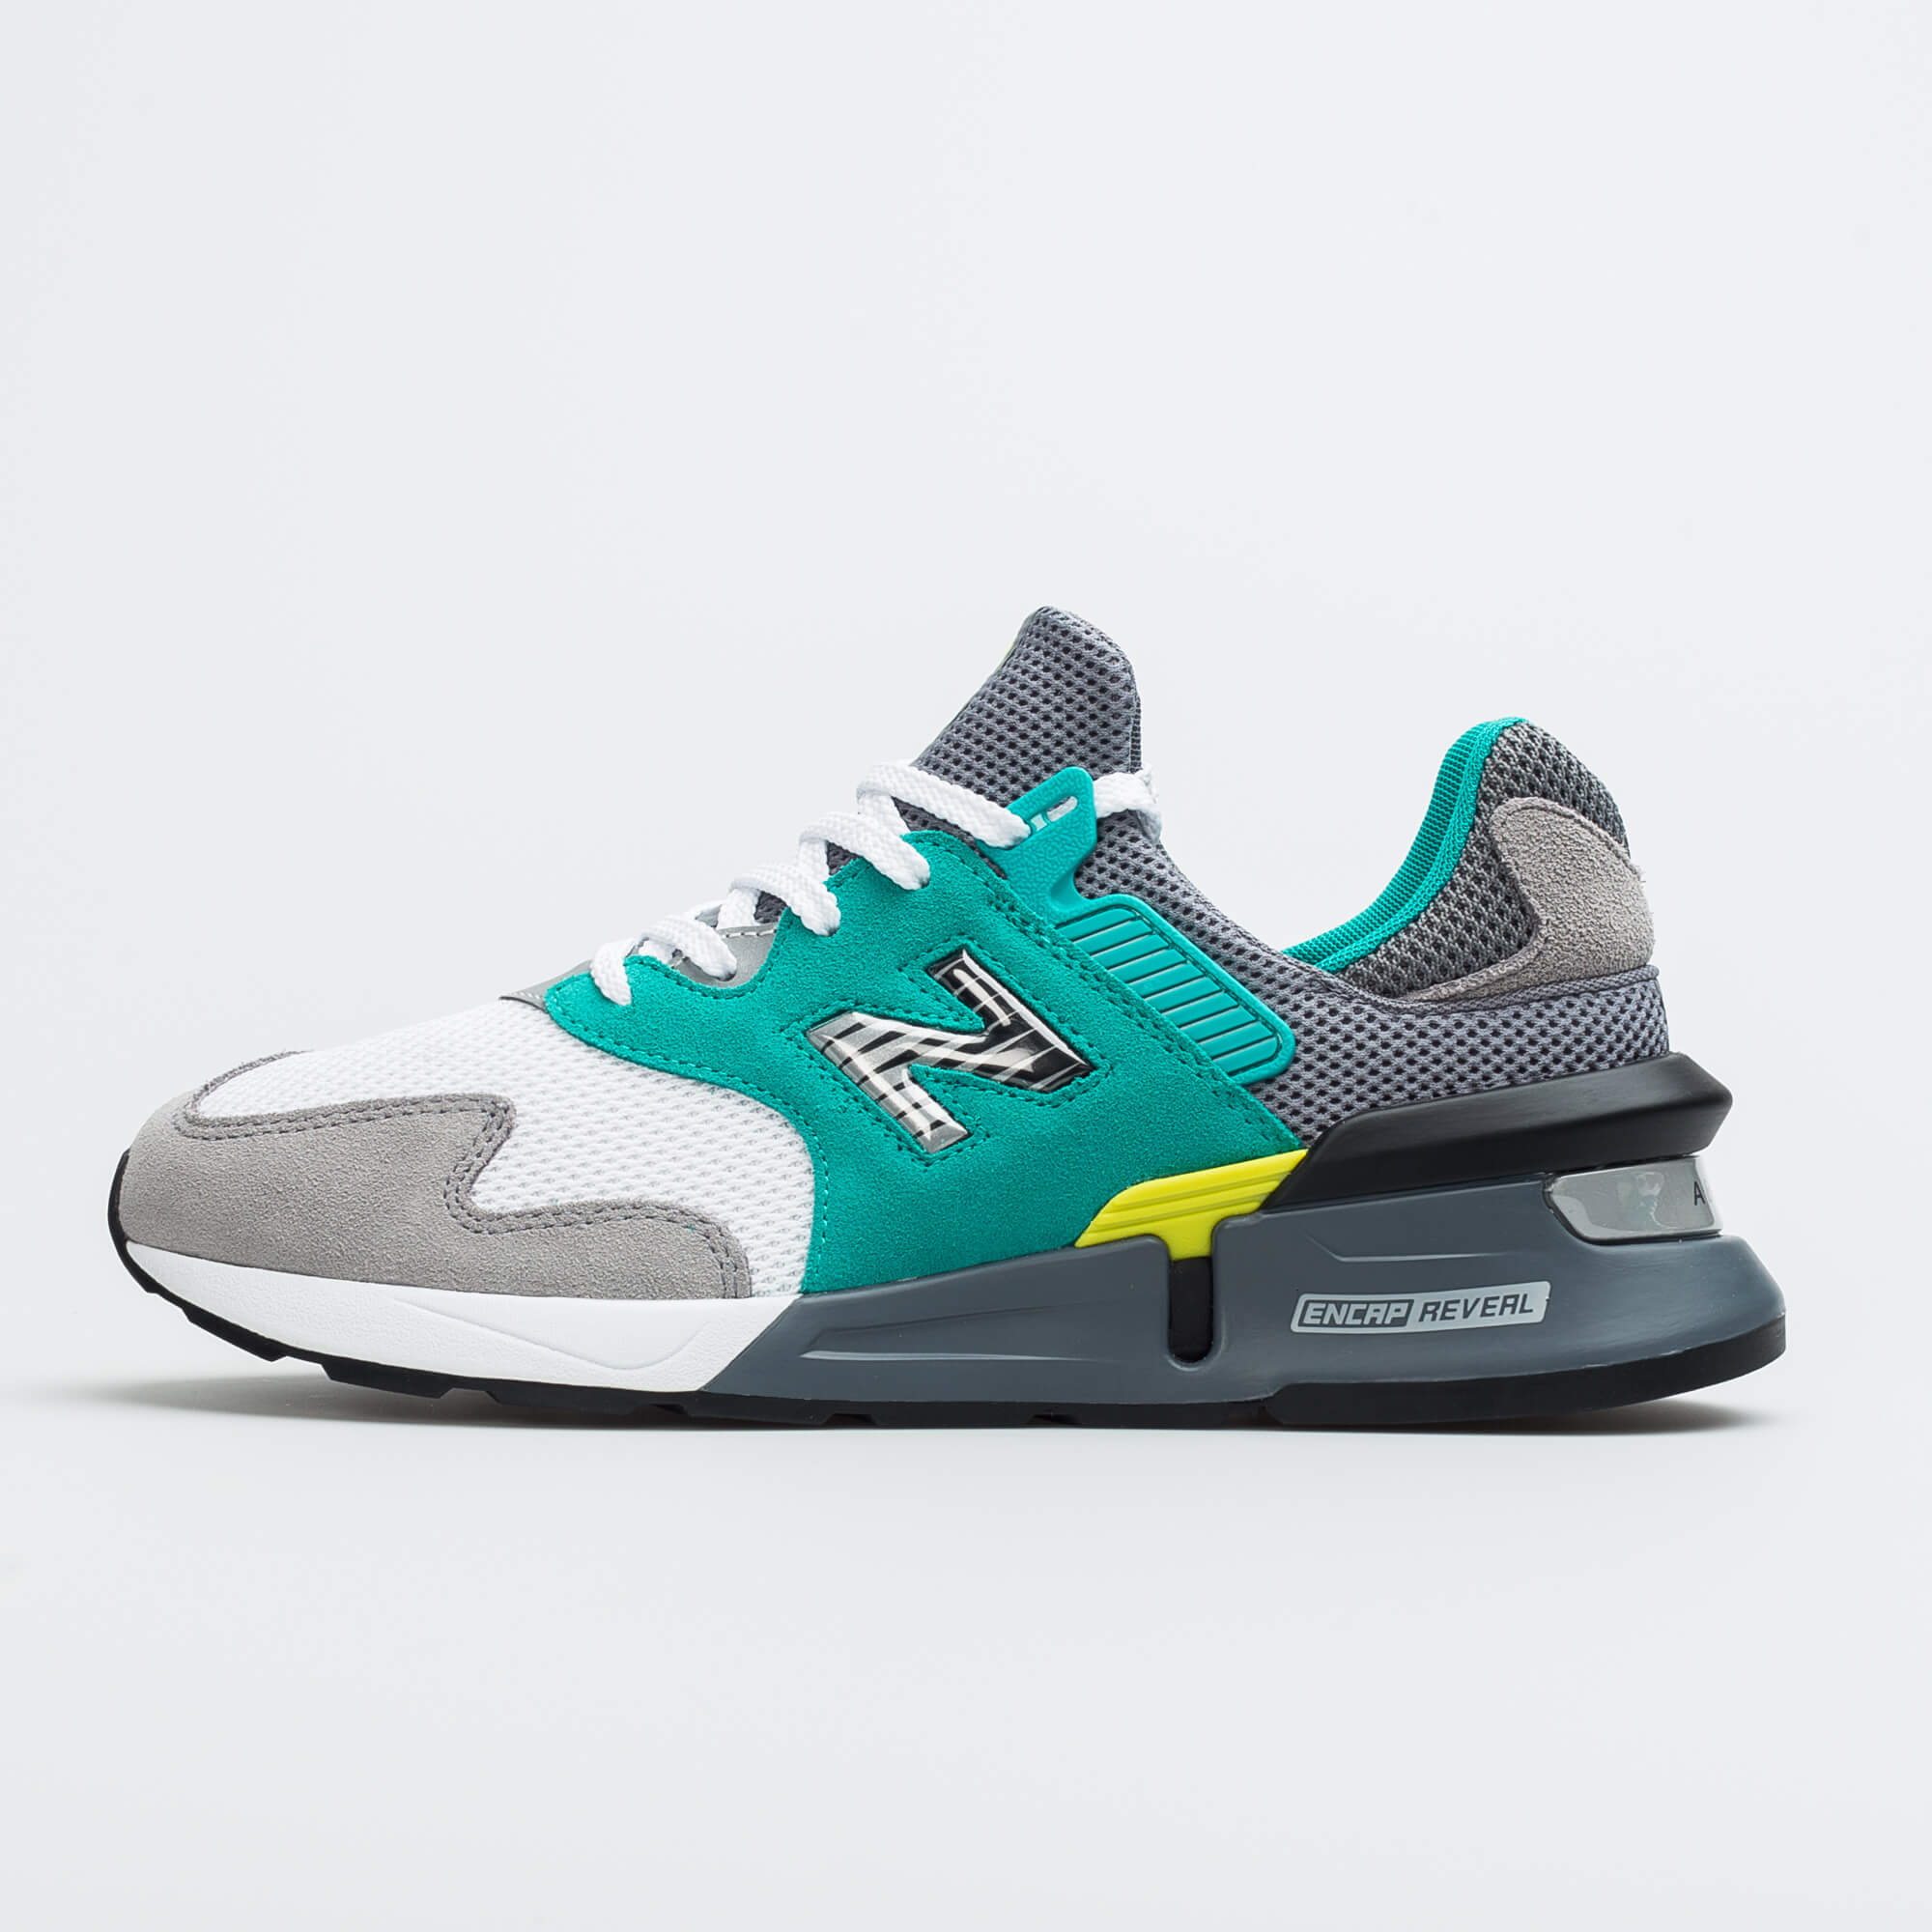 Bombardeo Pólvora solitario On Sale: New Balance 997 Sport "Grey Green" — Sneaker Shouts